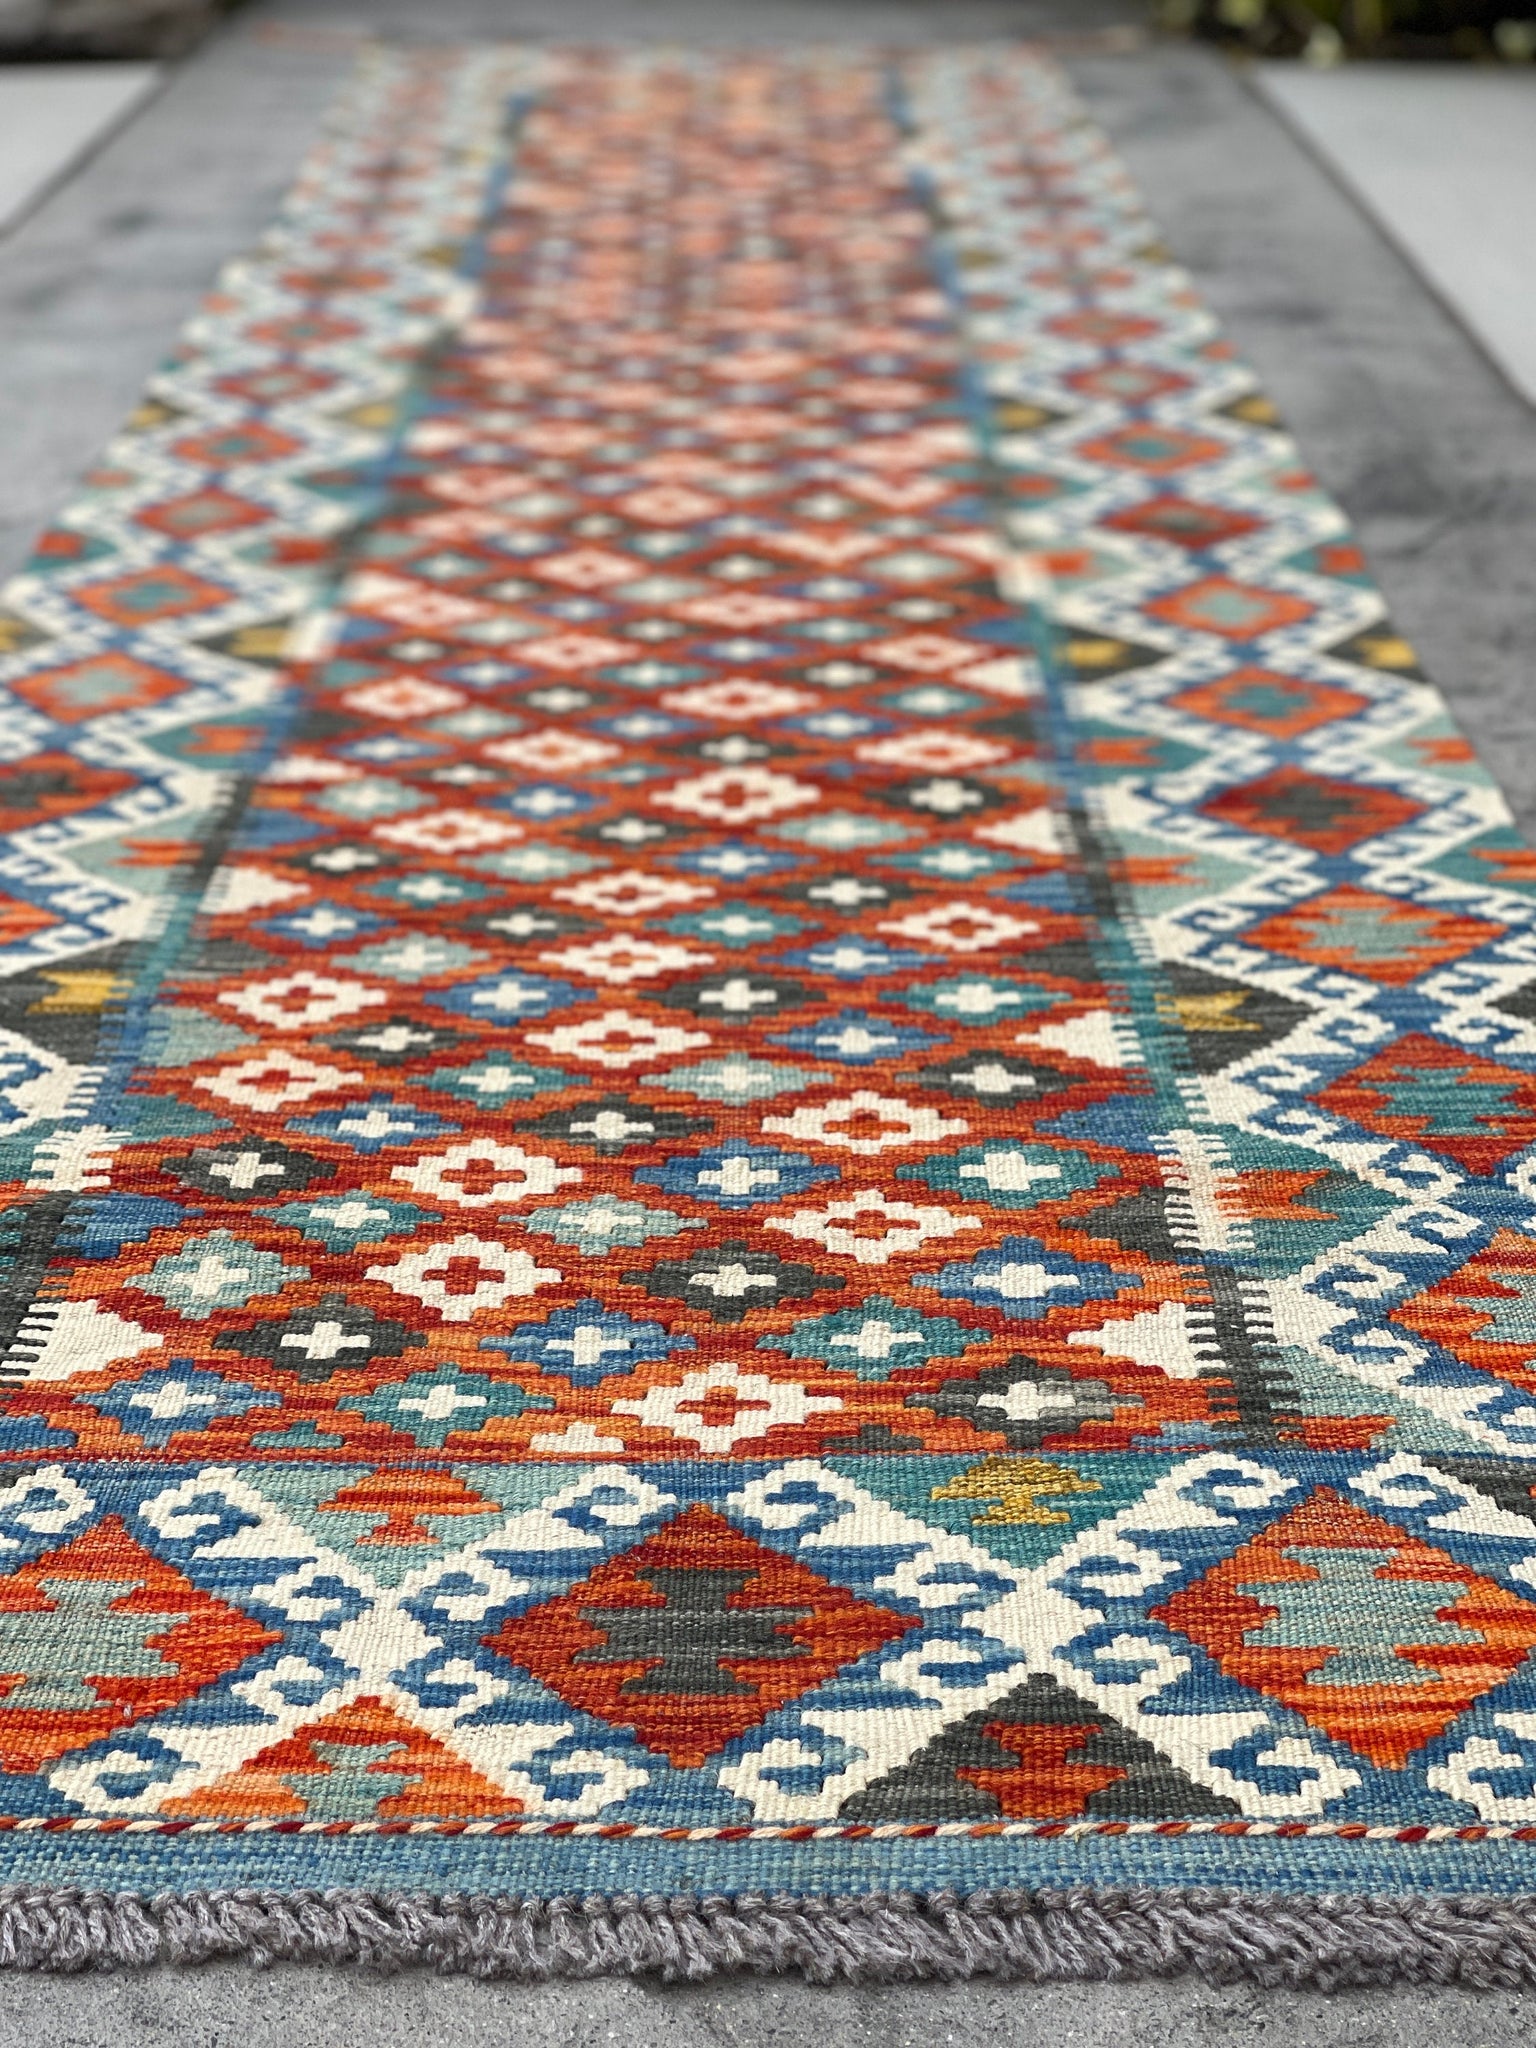 3x13 (90x395) Handmade Afghan Kilim Rug Runner 